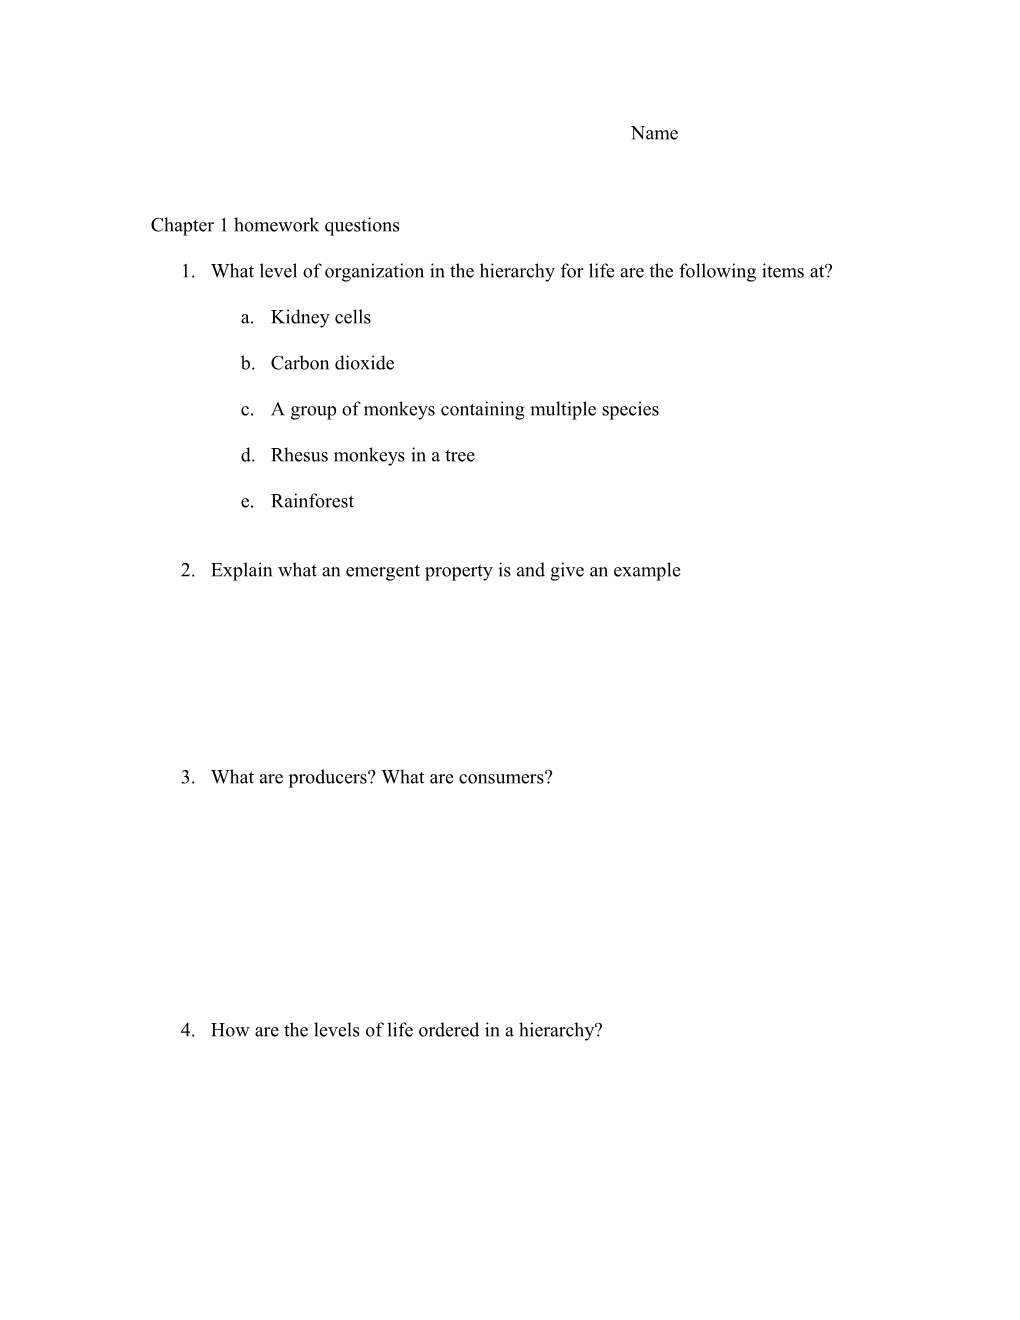 Chapter 1 Homework Questions